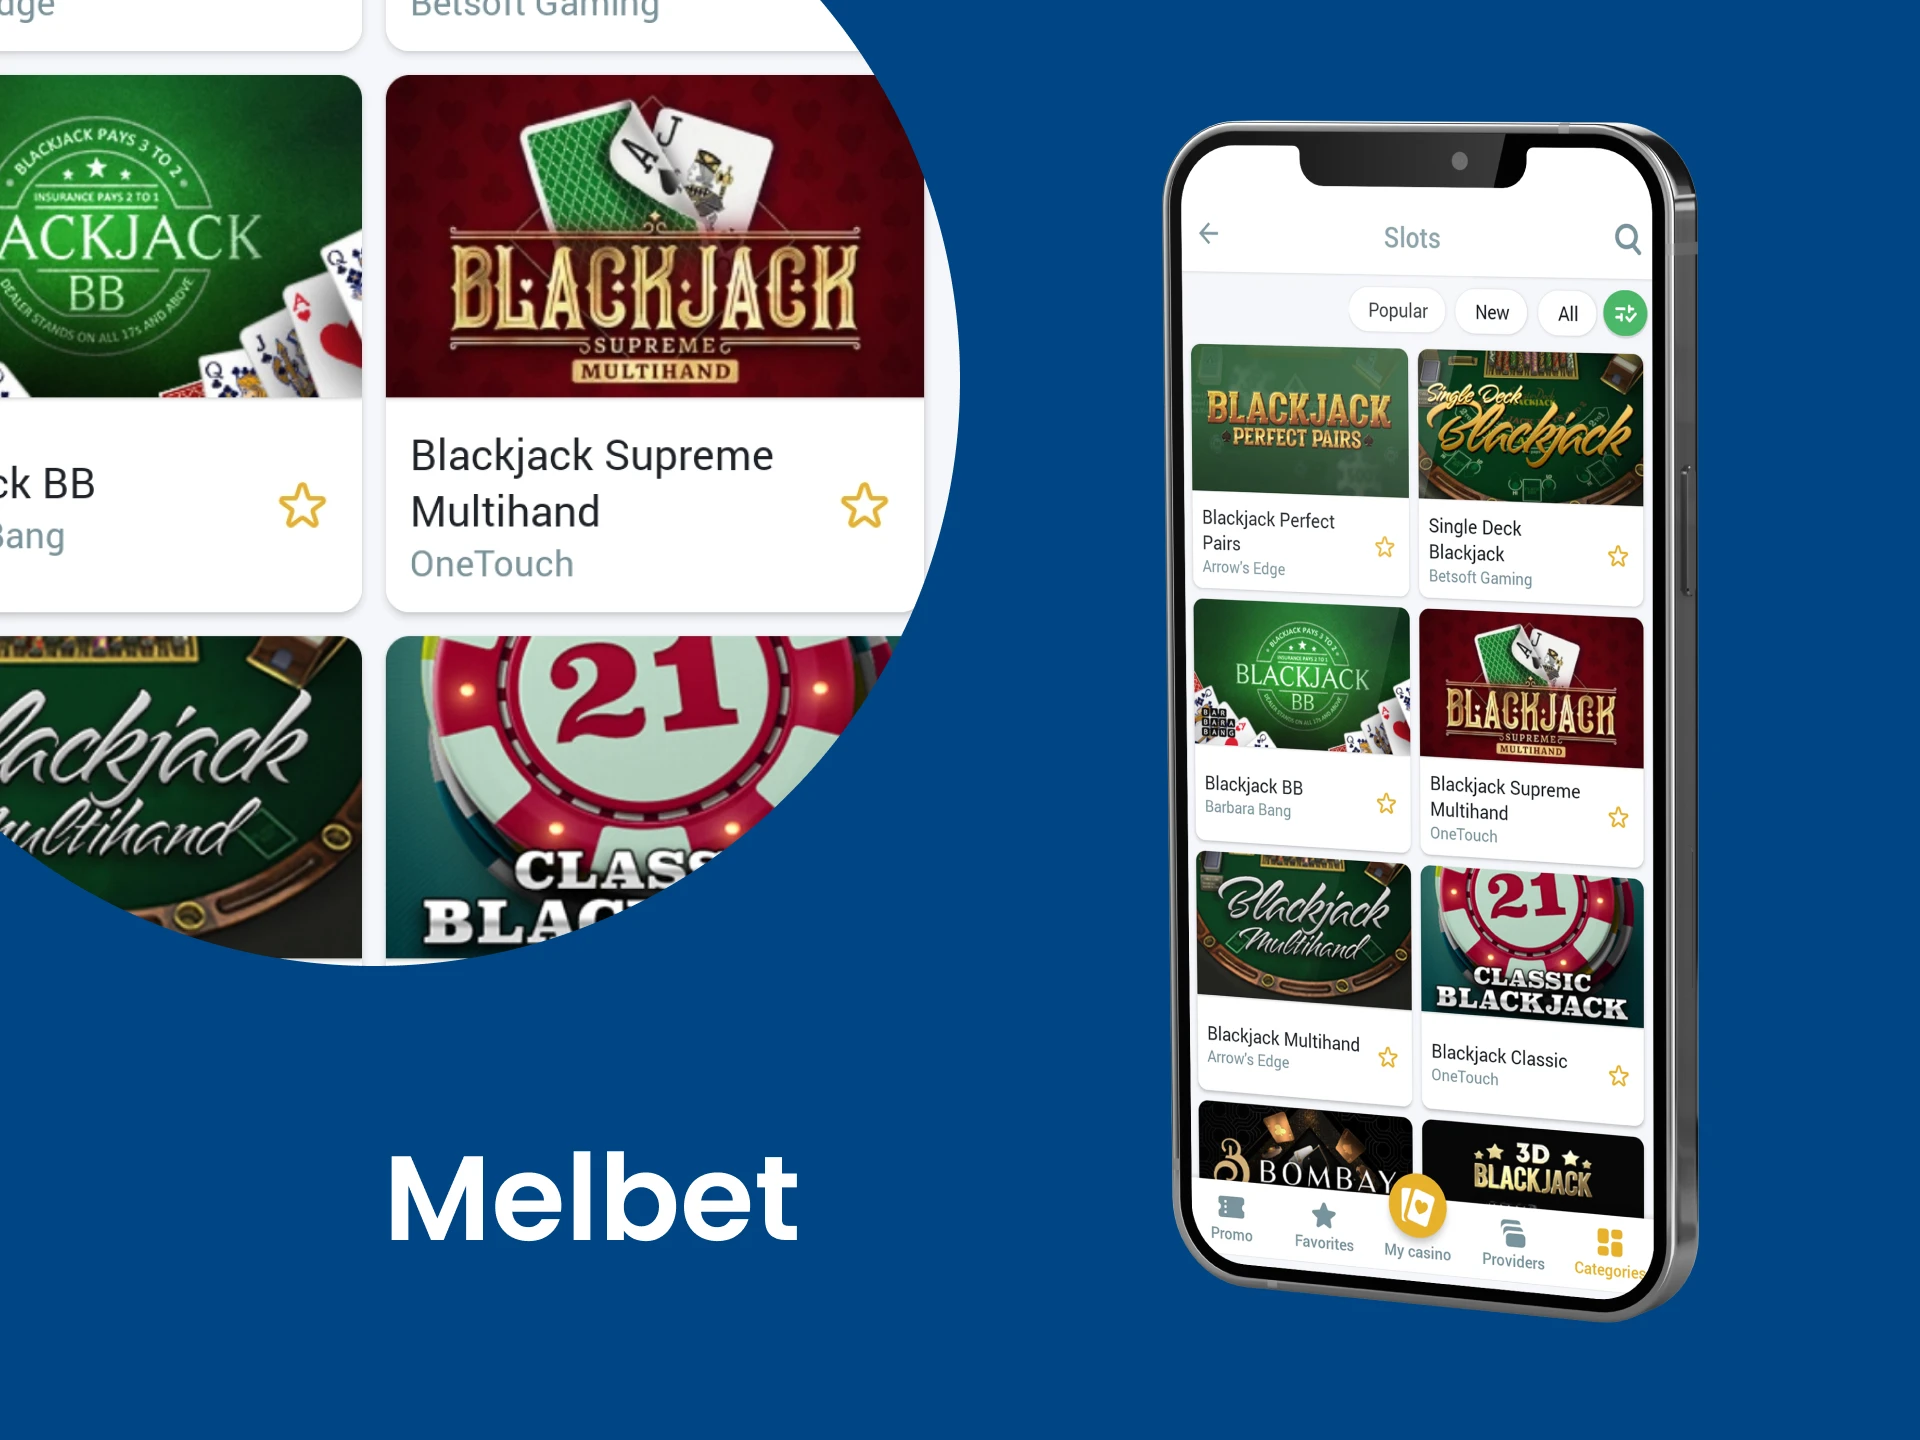 Download the Melbet app to play Blackjack.